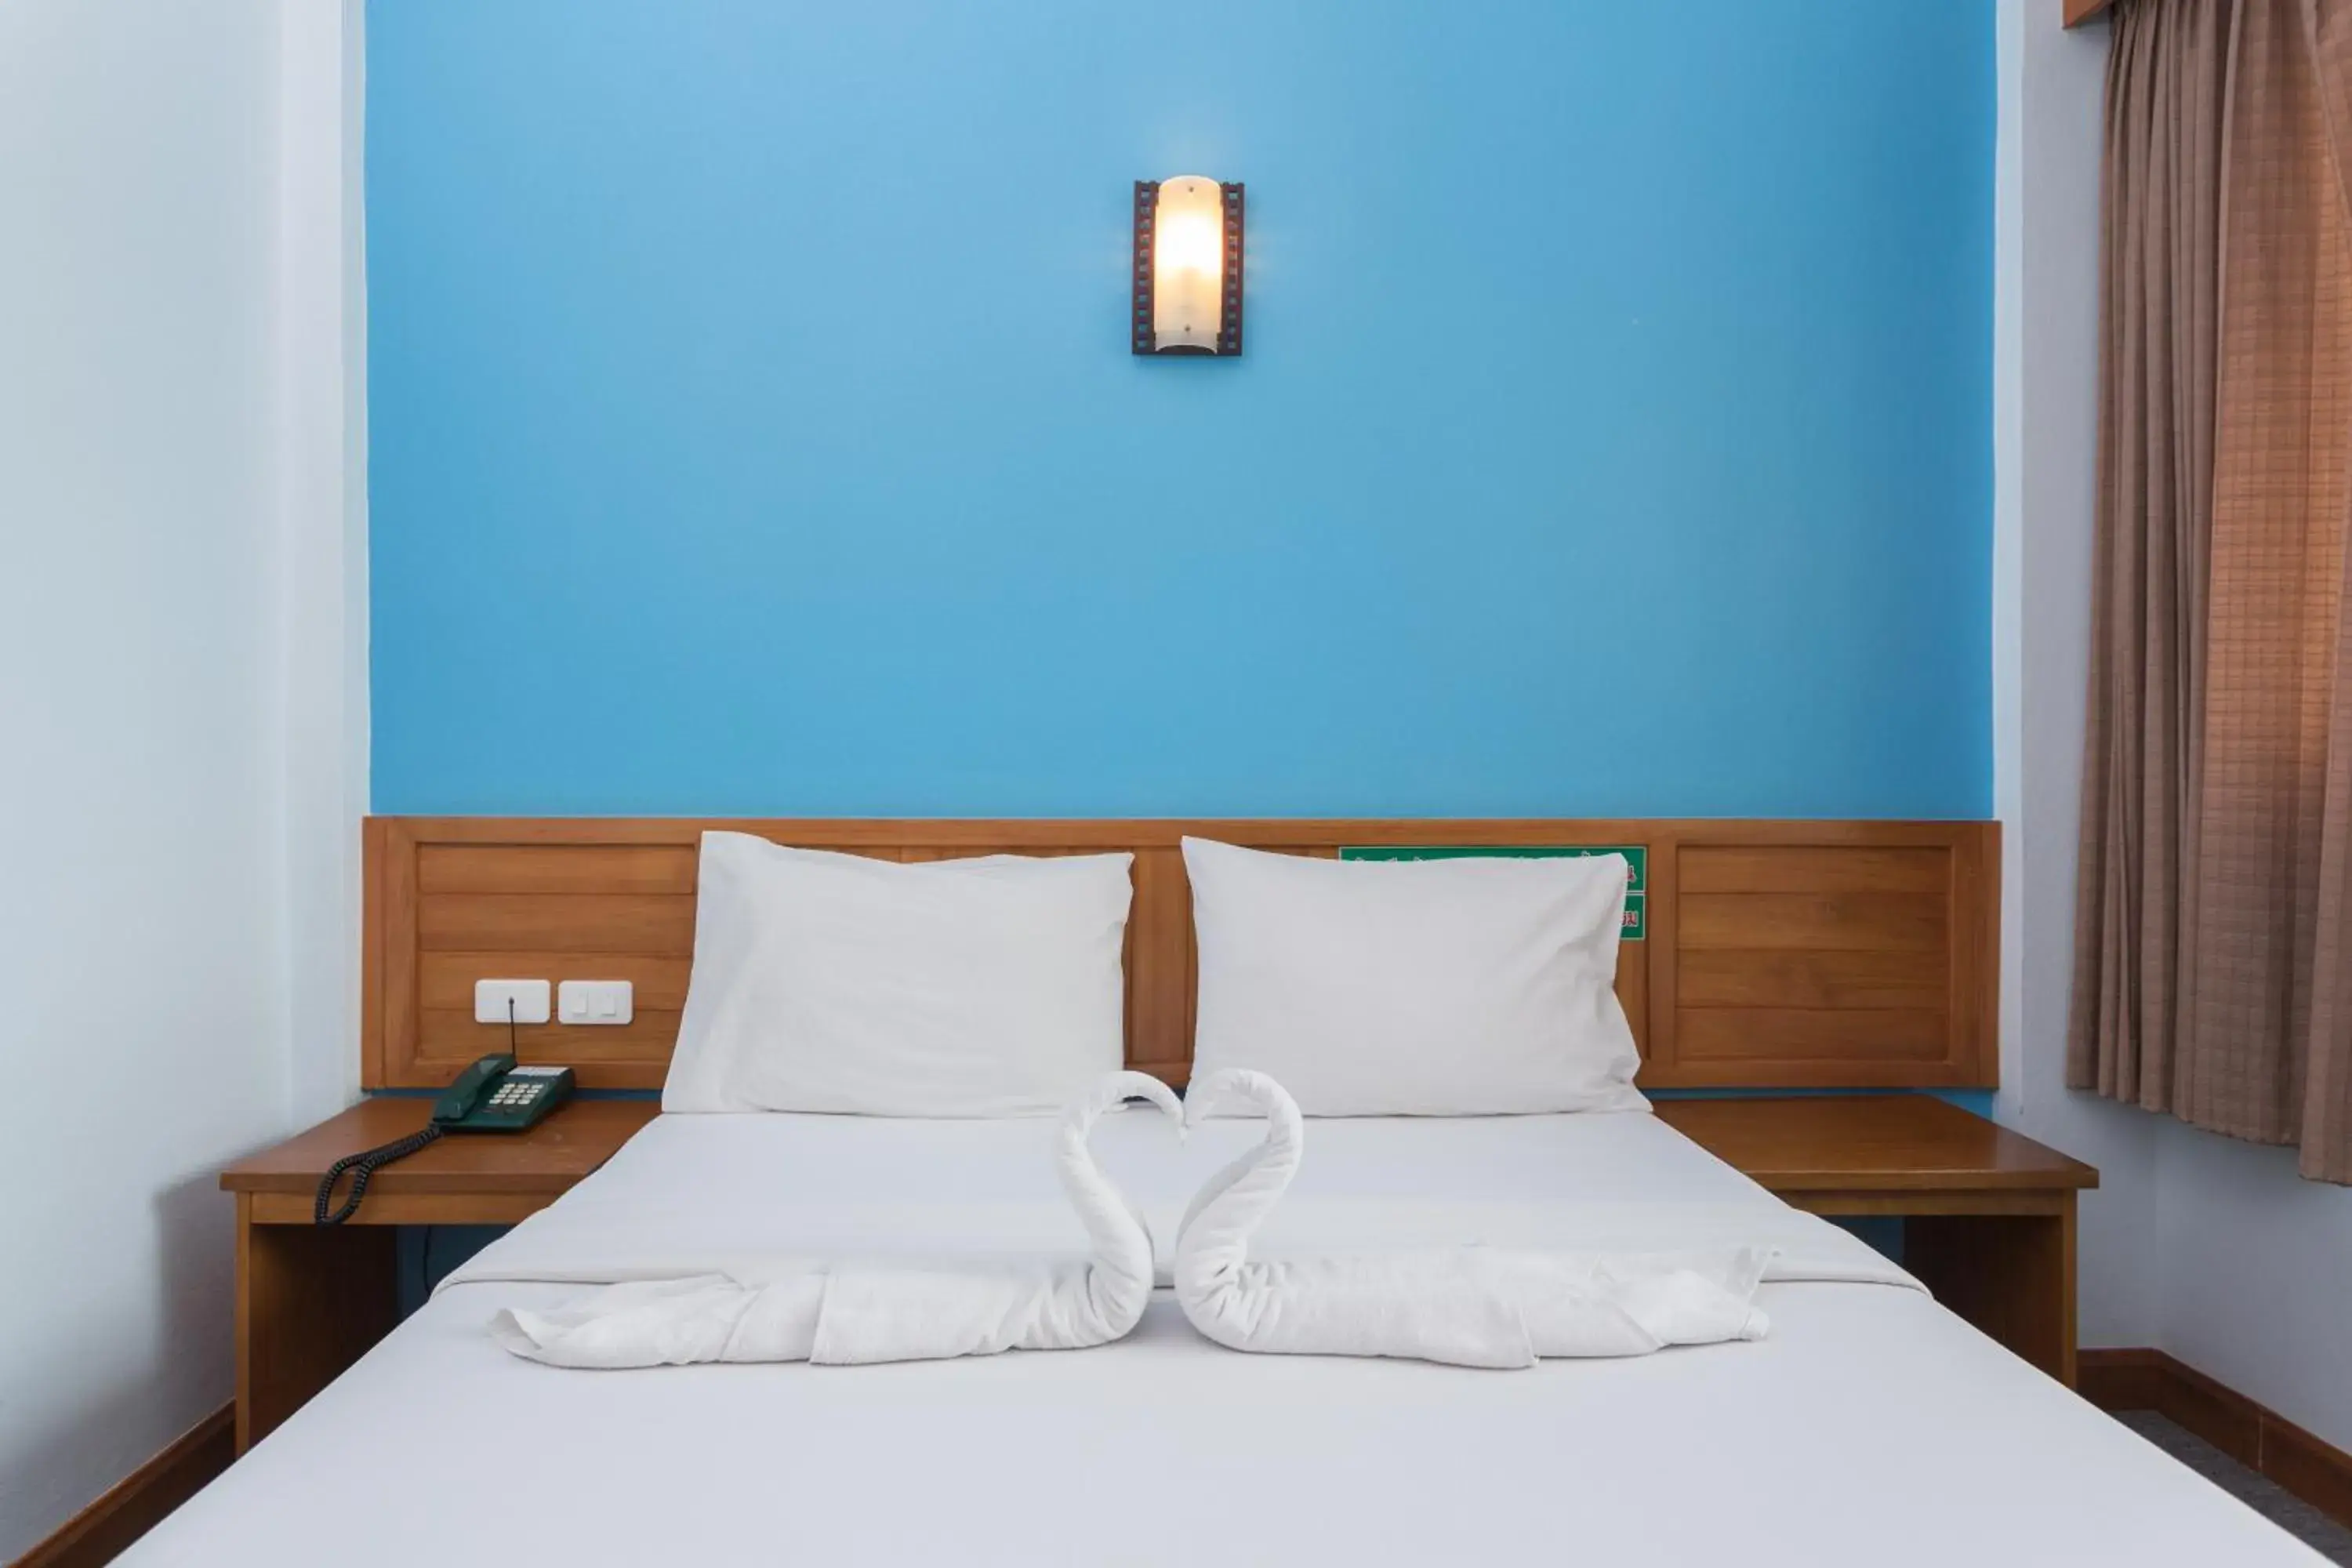 Bed, Room Photo in Riverside Hotel